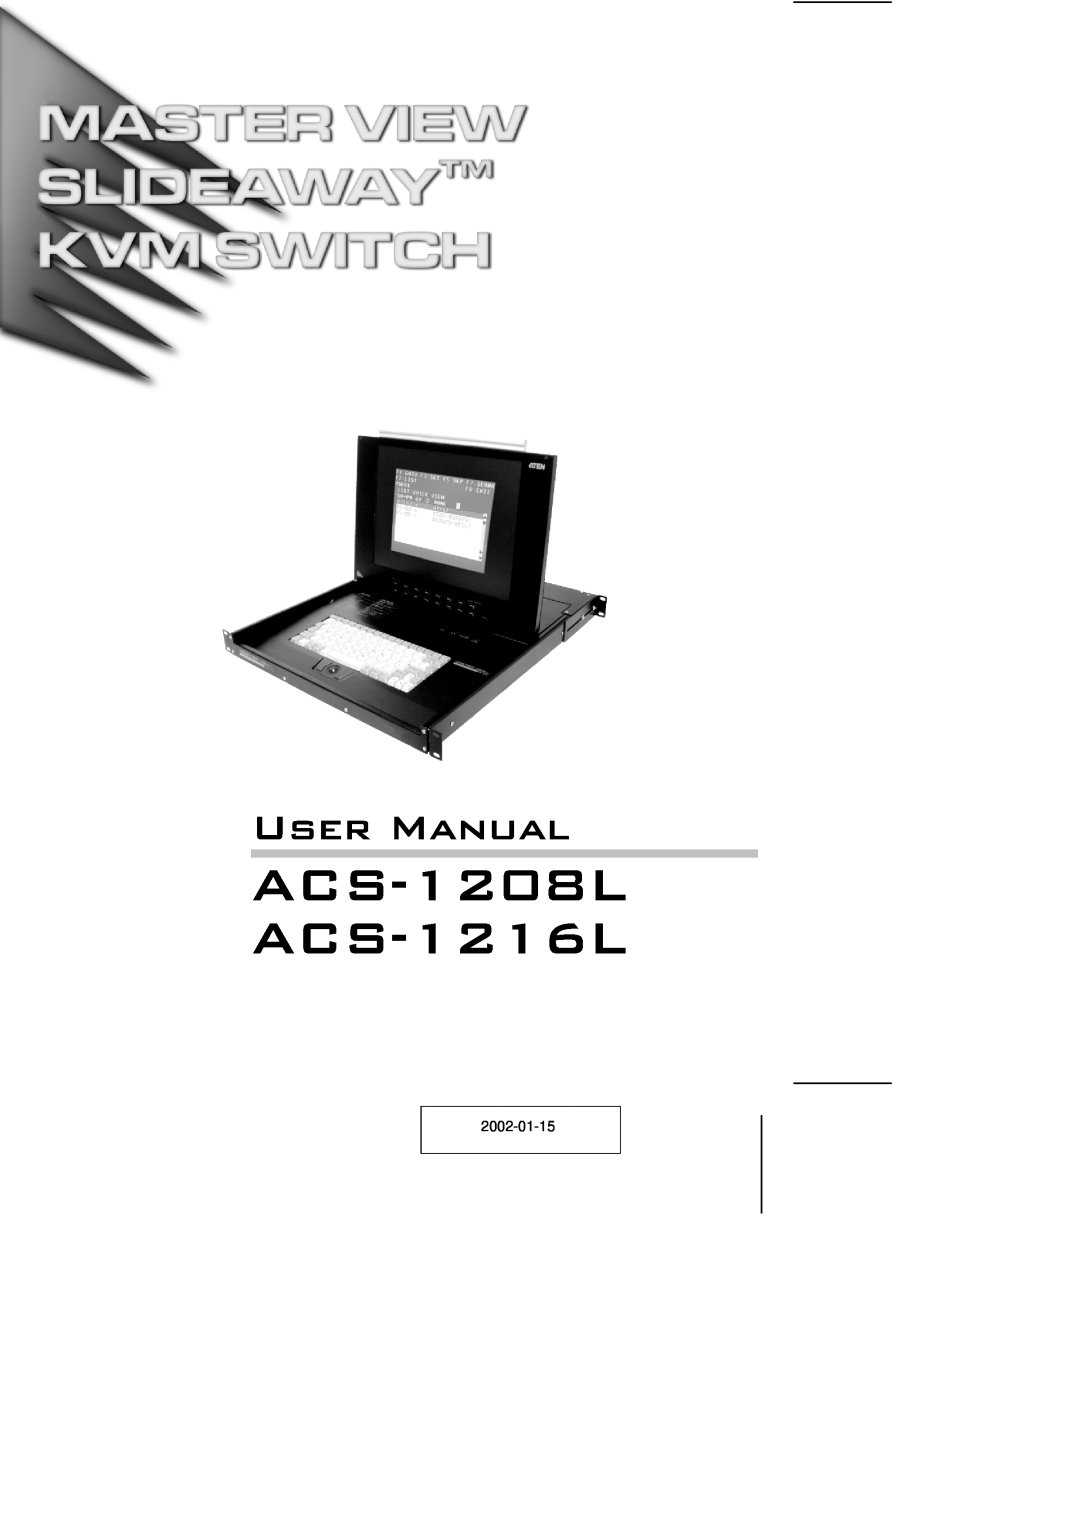 ATEN Technology user manual ACS-1208L ACS-1216L, User Manual 